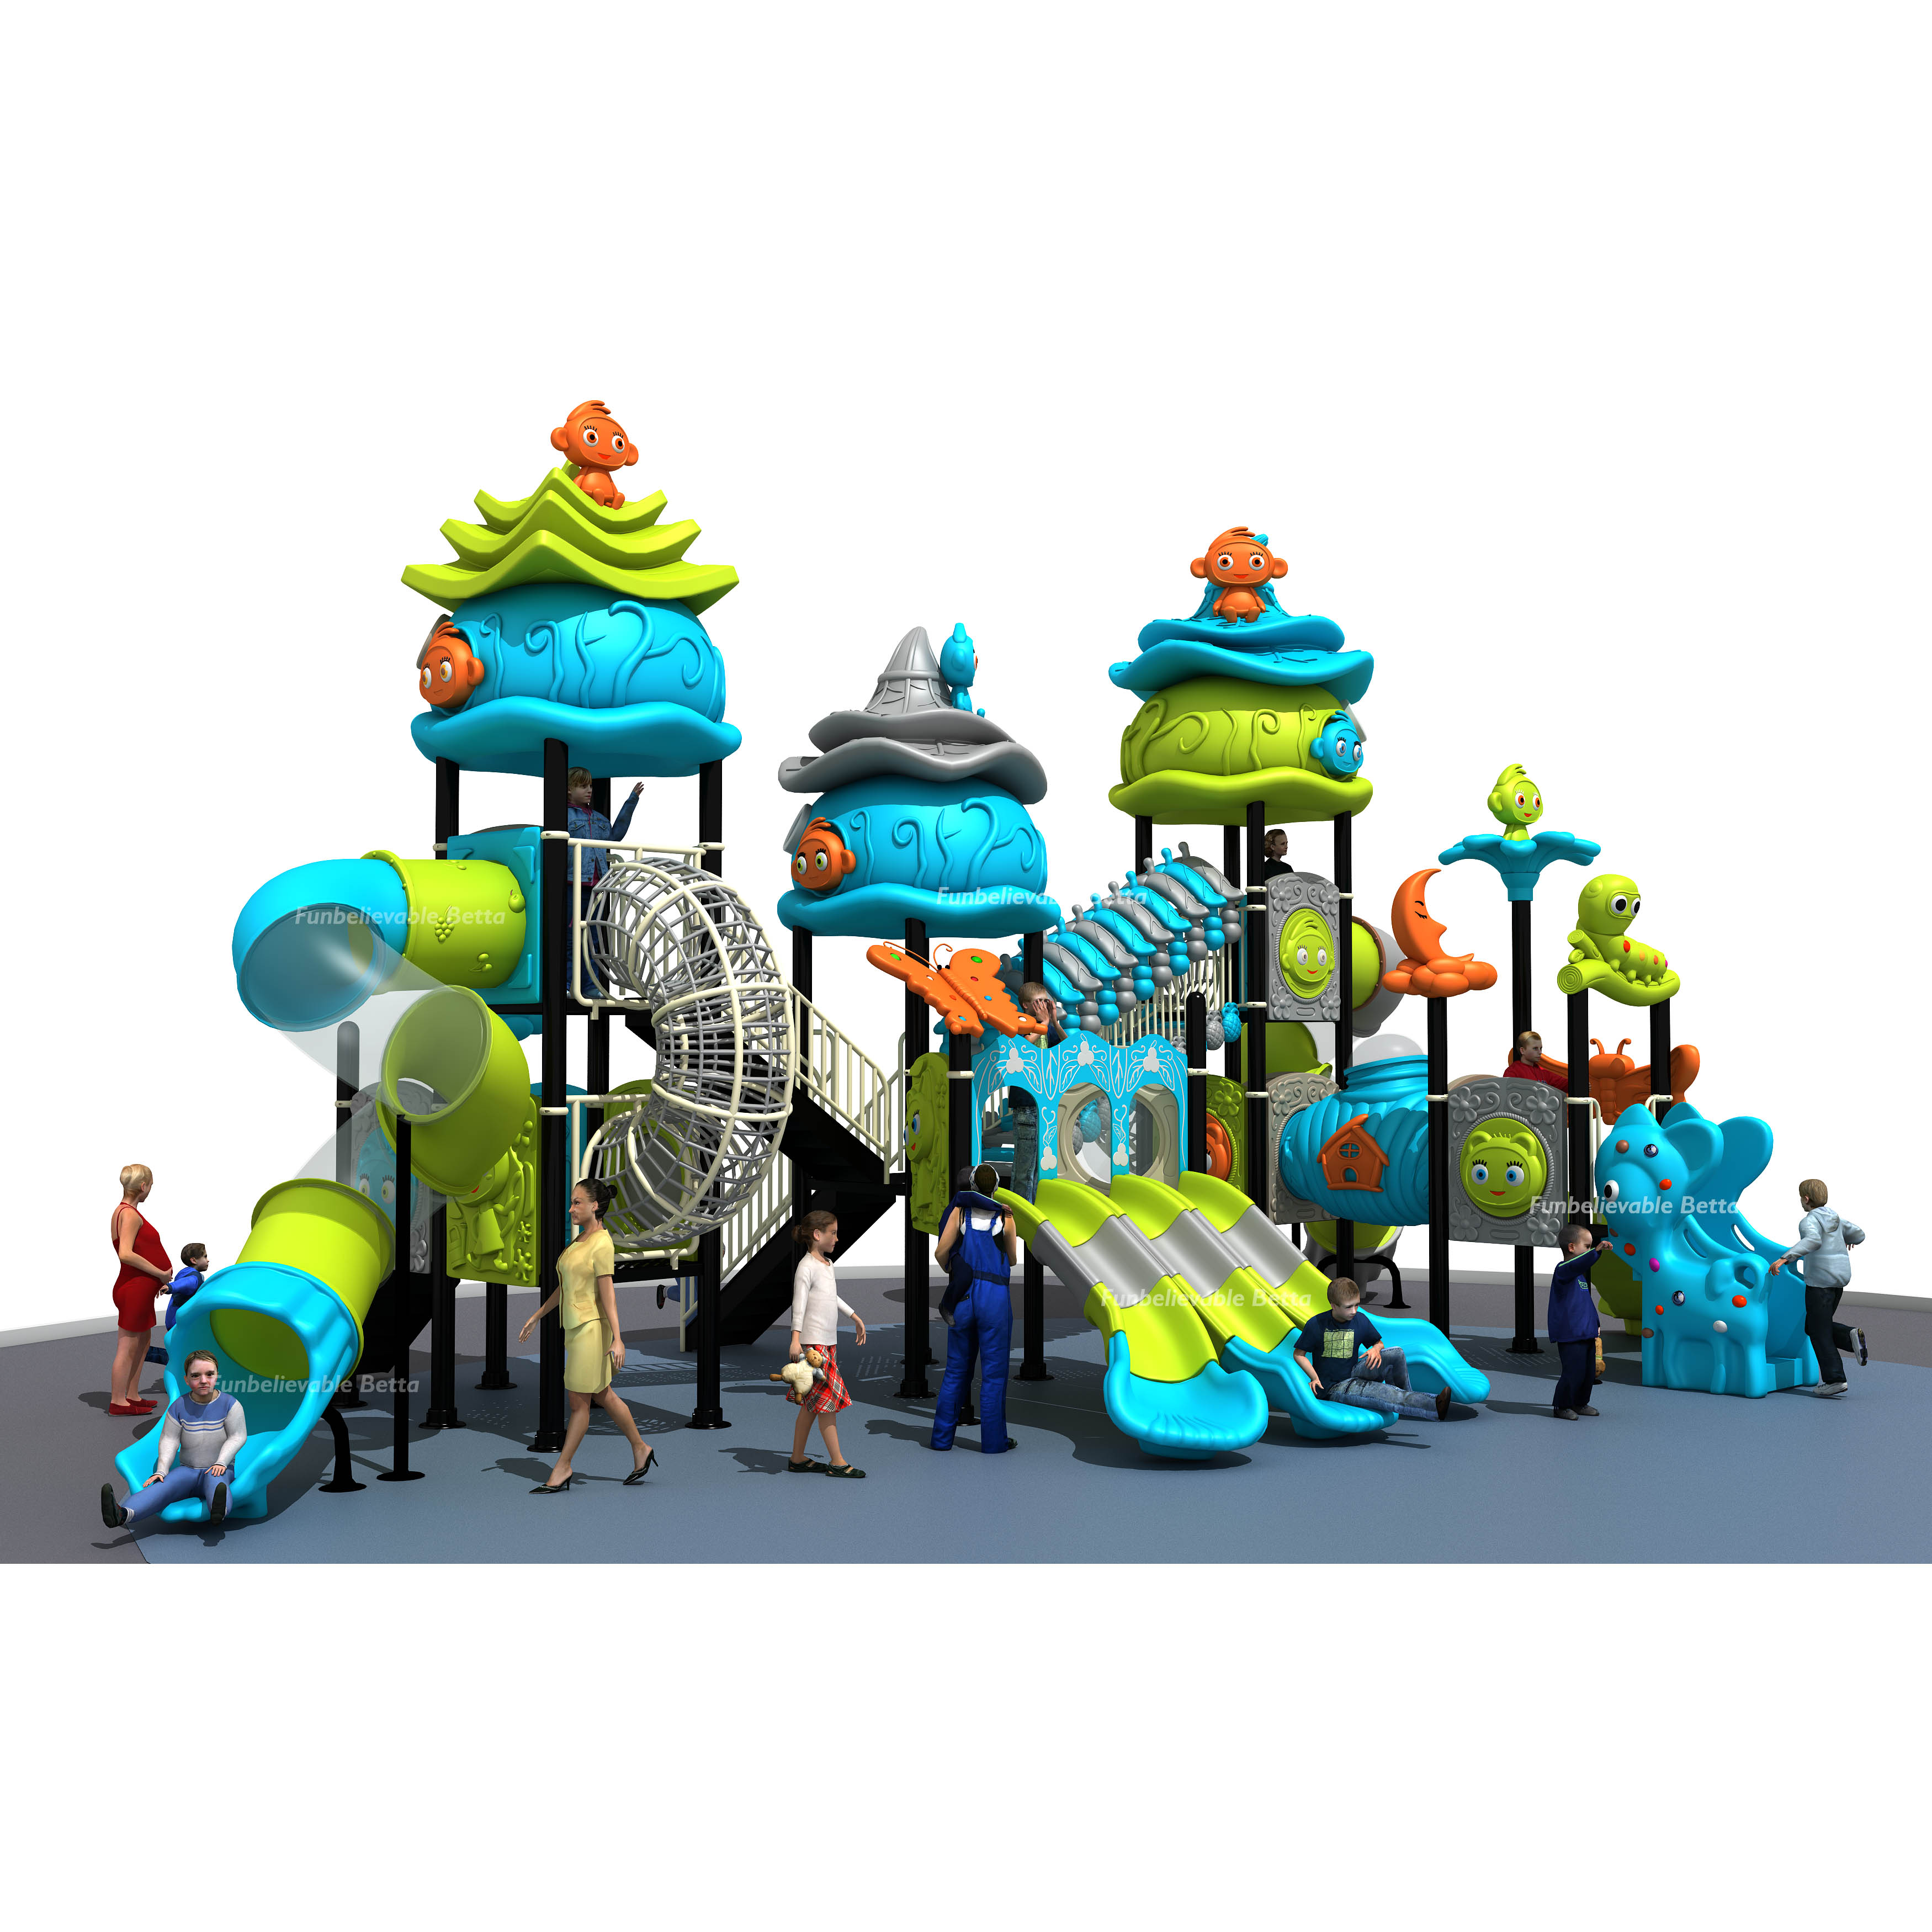 Bettaplay Jungle Gym for Kids Outdoor slide Kids Playground Equipment